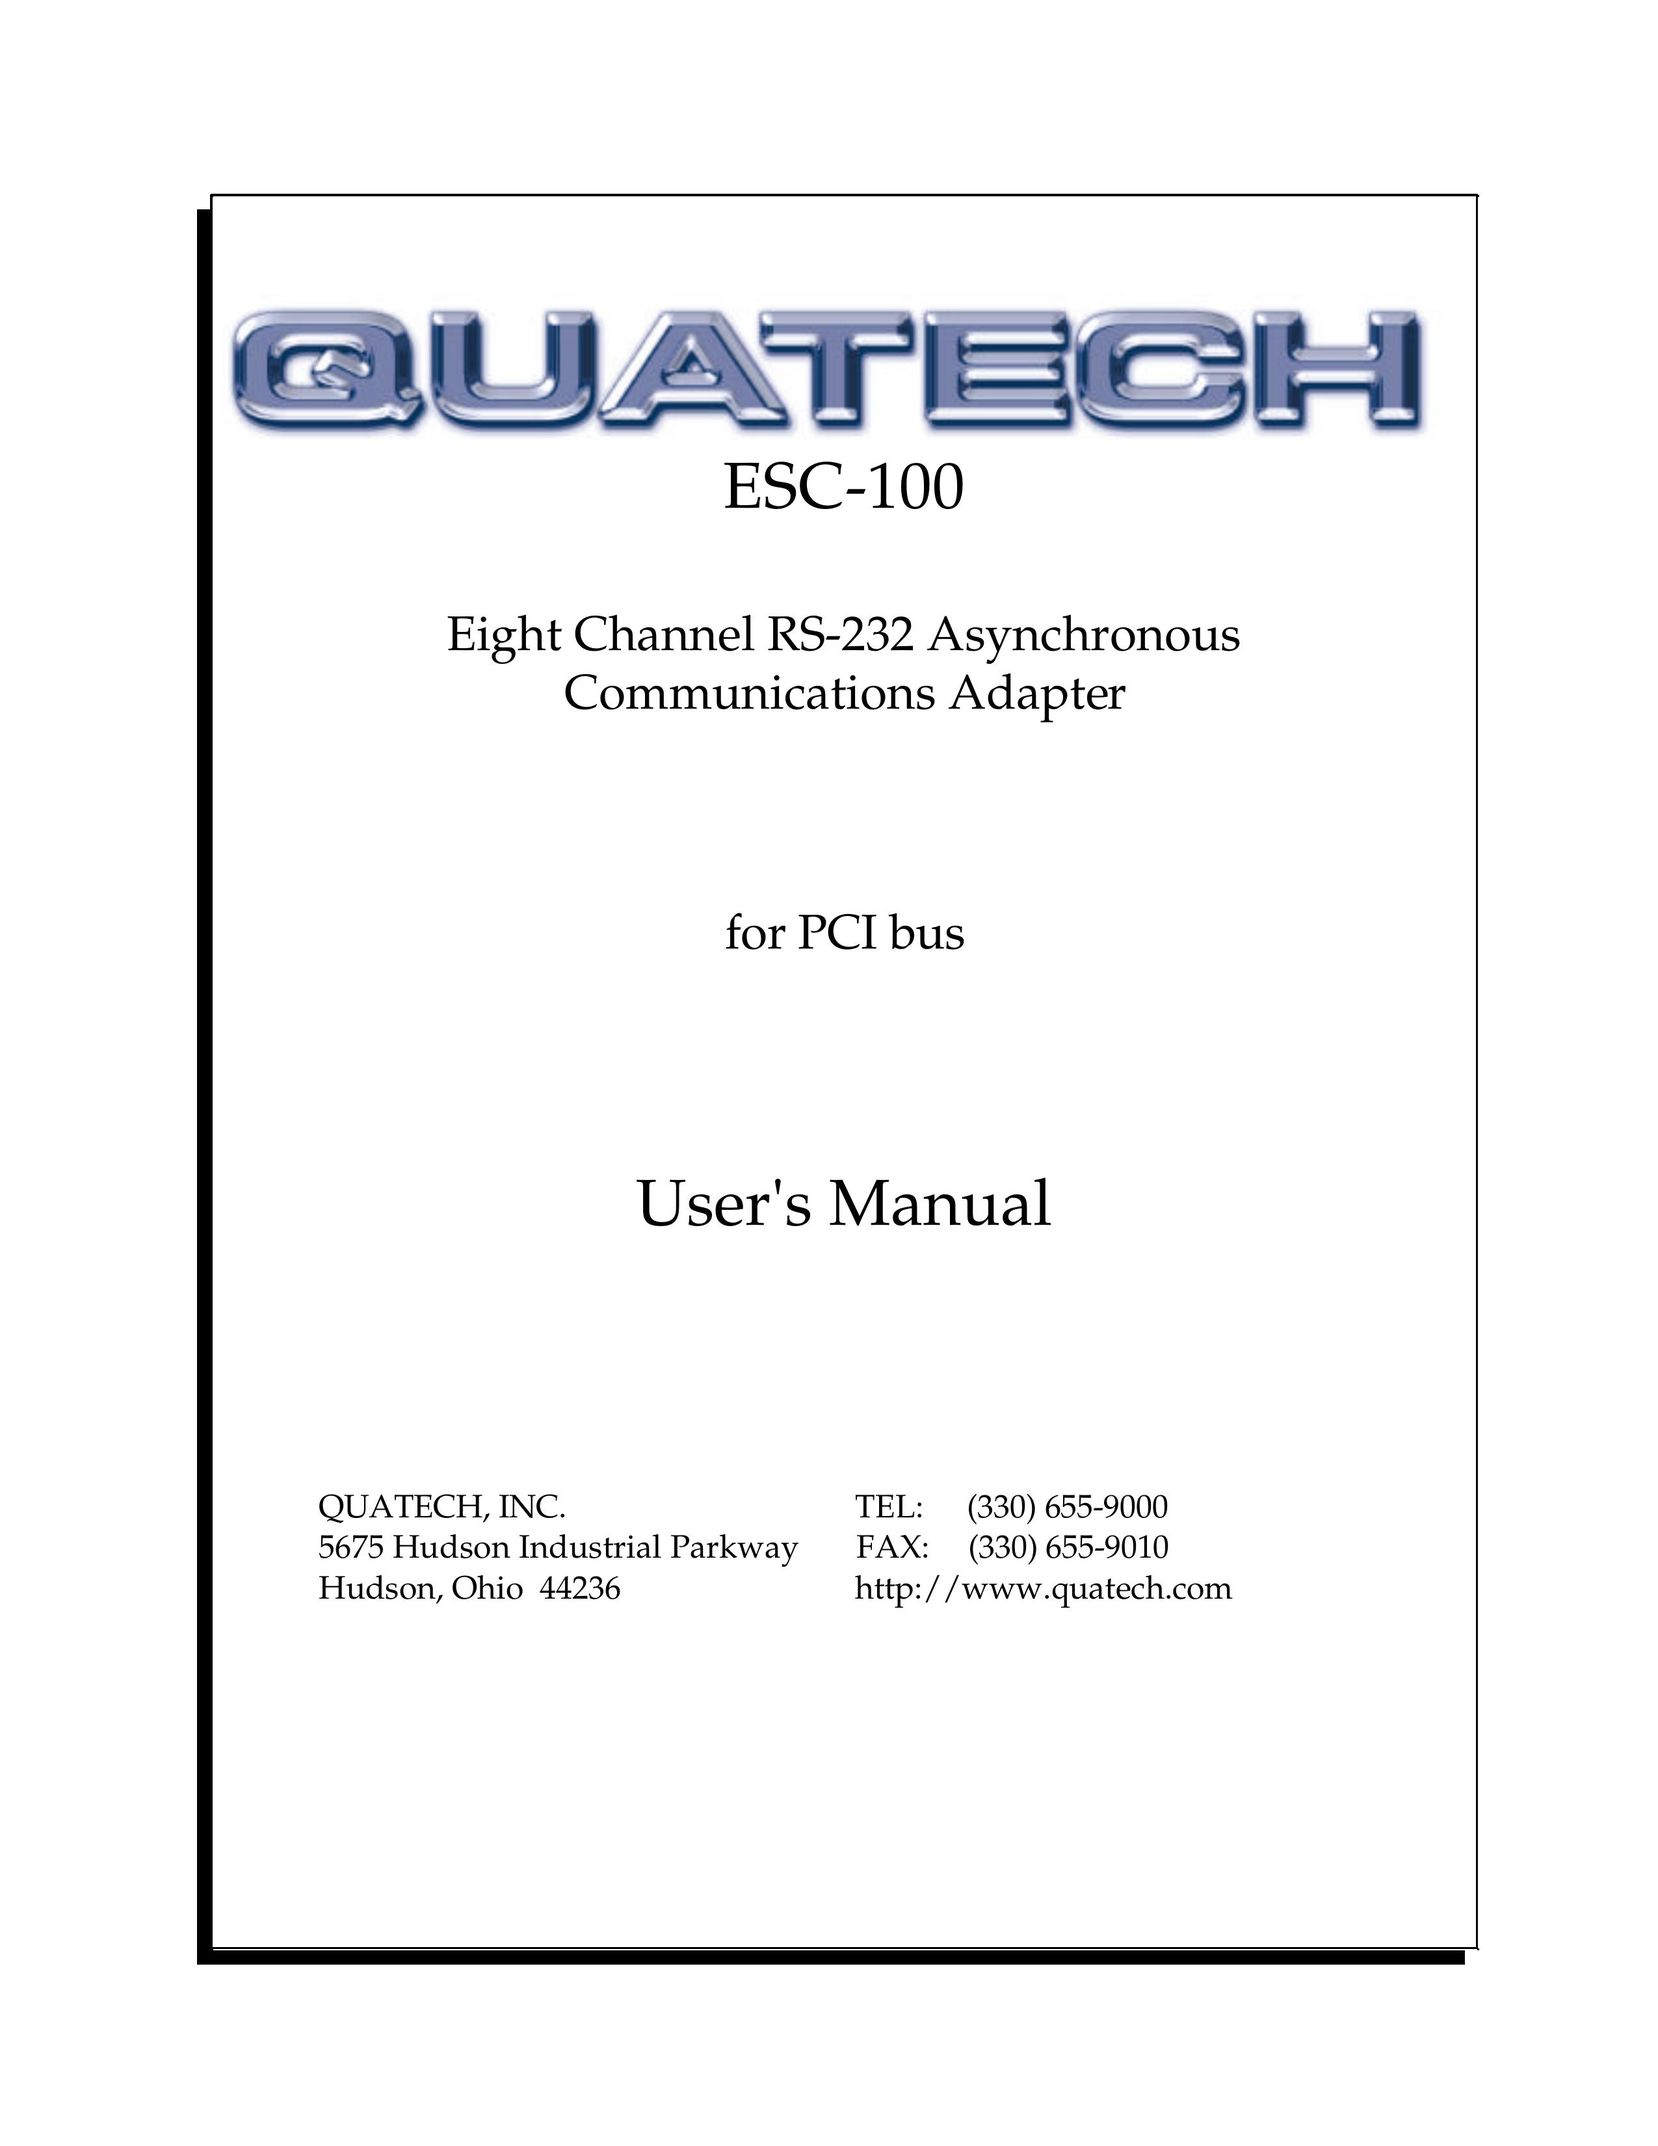 Quatech ESC-100 Network Card User Manual